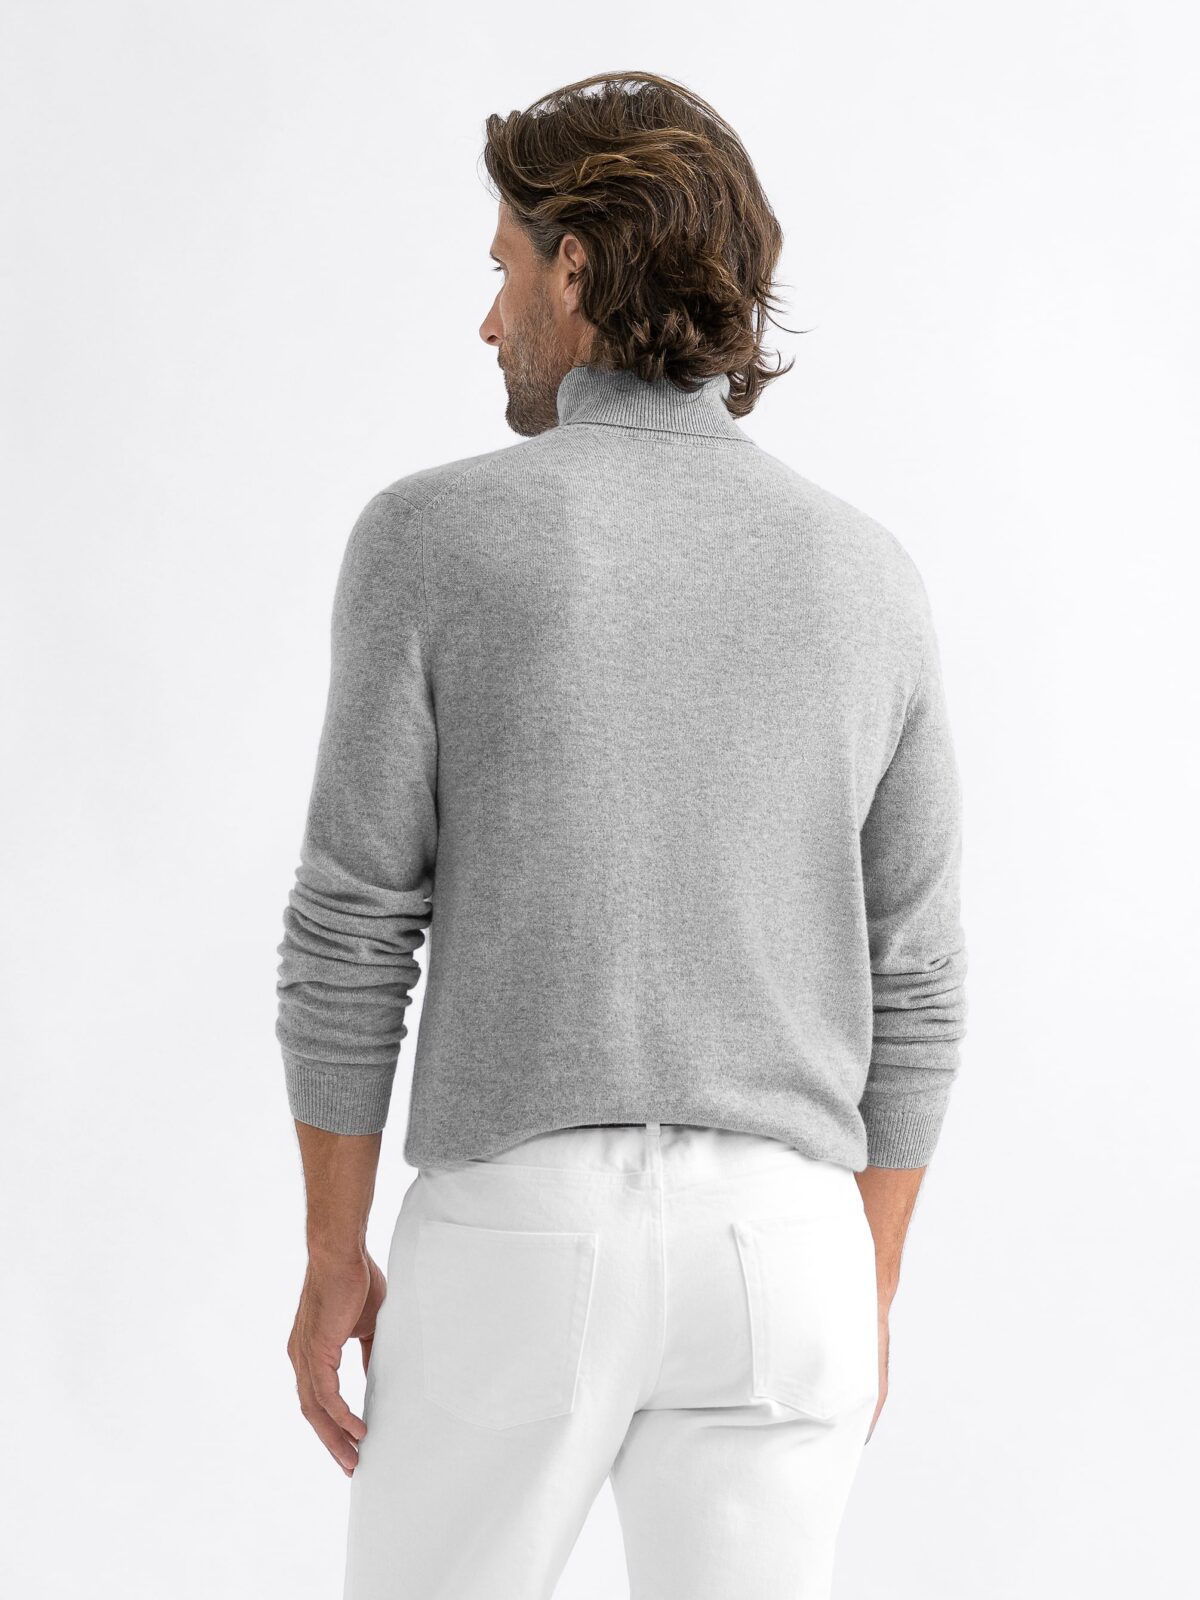 Light Grey Cashmere Turtleneck Sweater